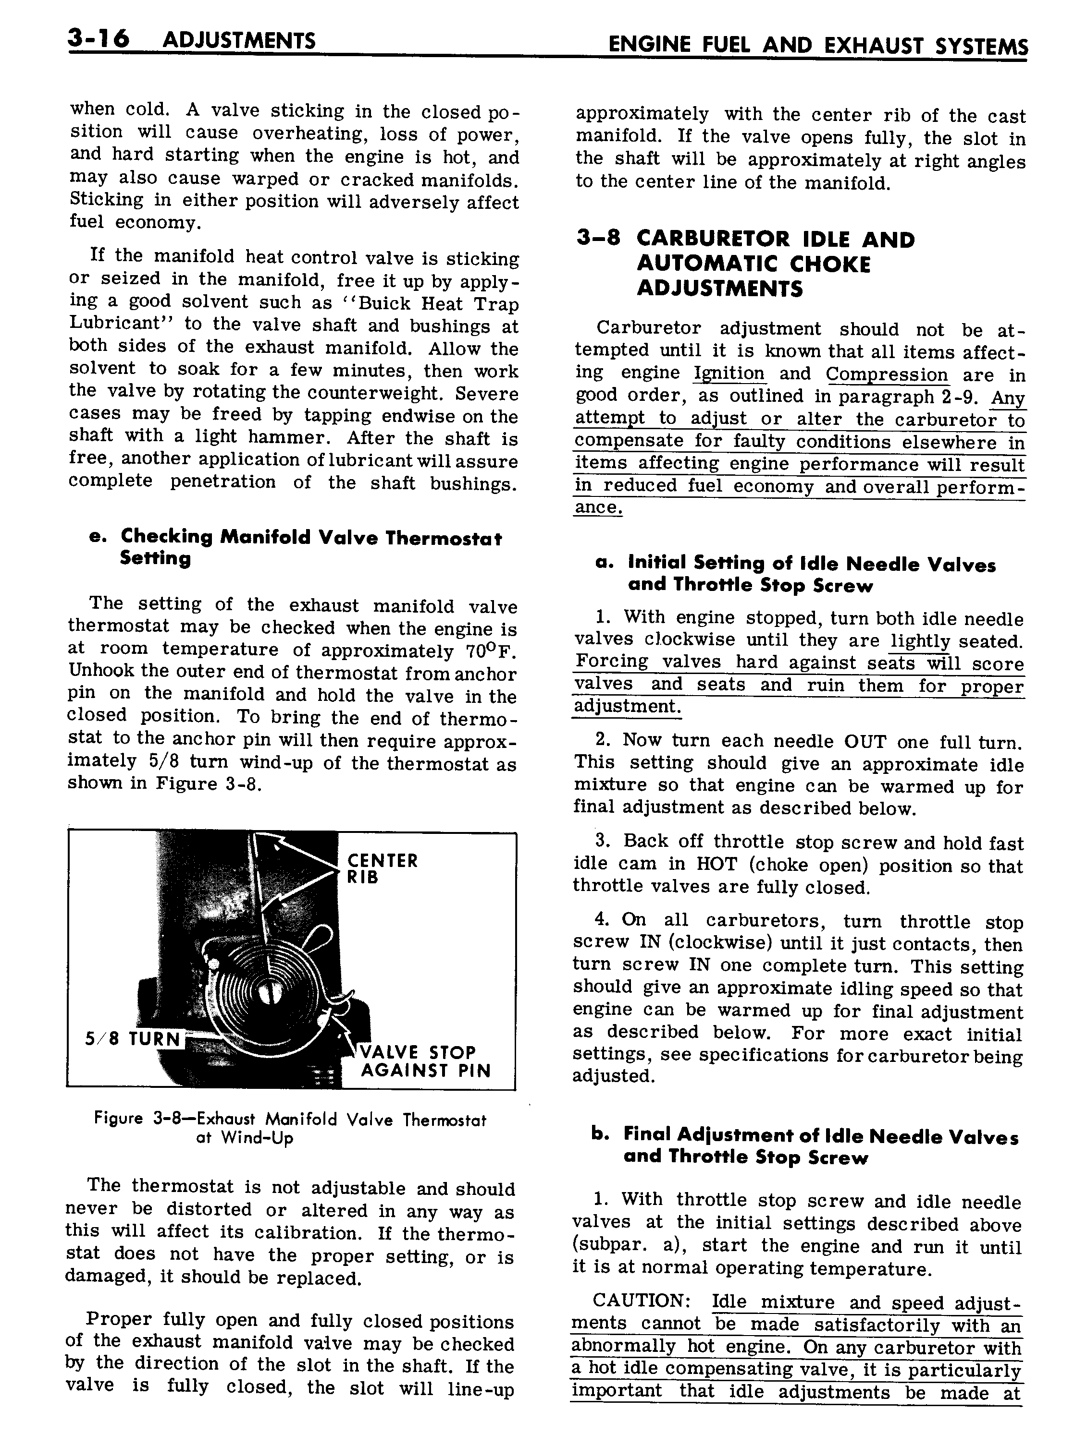 n_04 1961 Buick Shop Manual - Engine Fuel & Exhaust-016-016.jpg